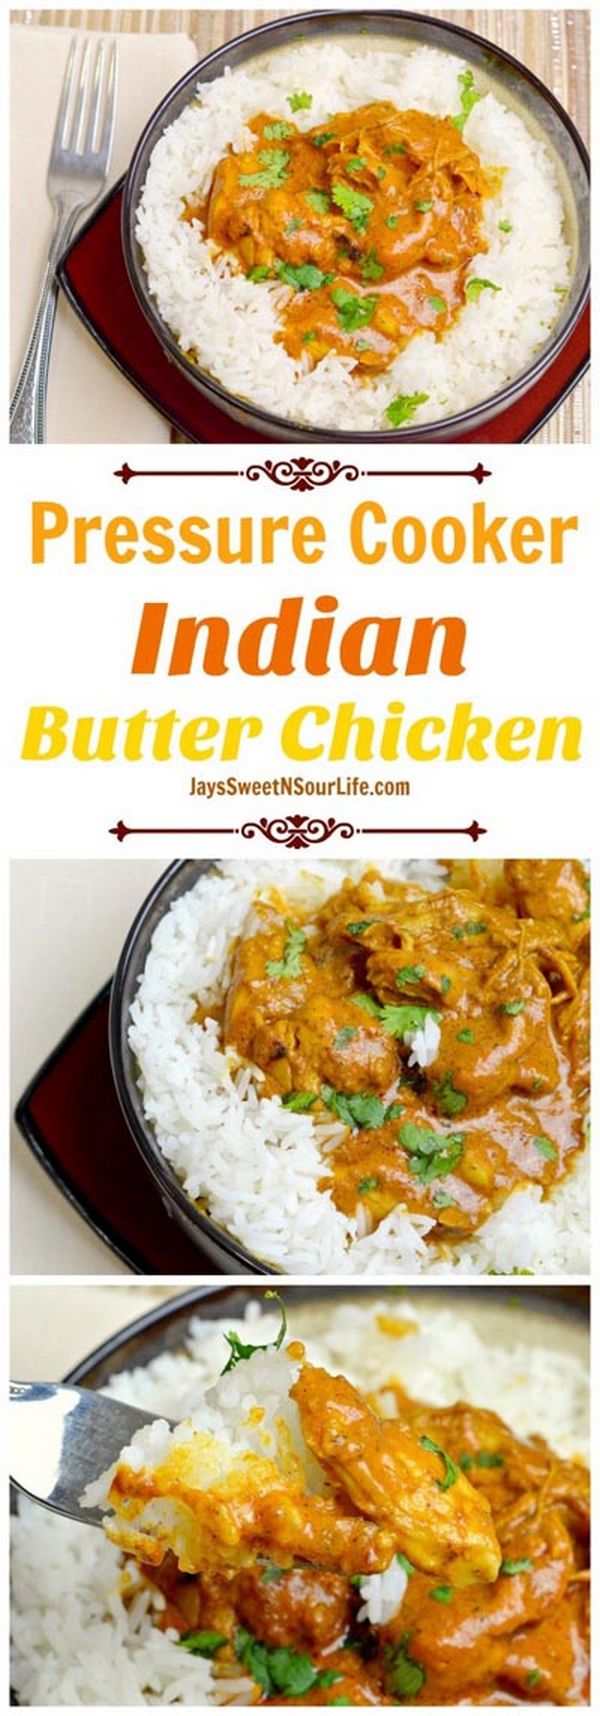 Pressure Cooker Indian Butter Chicken Recipe